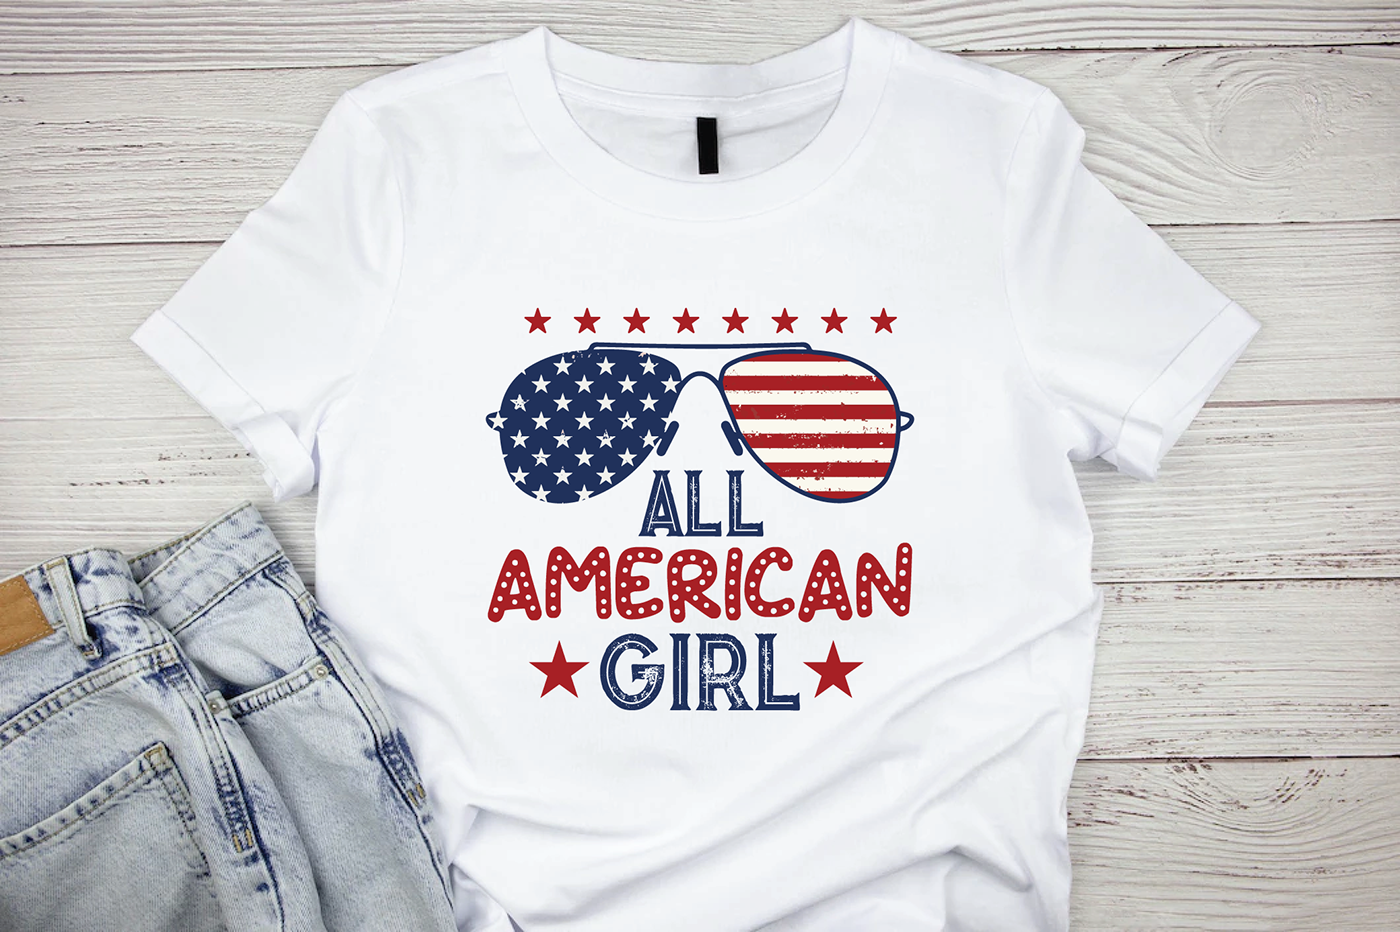 All American Girl T-shirt Design | Behance